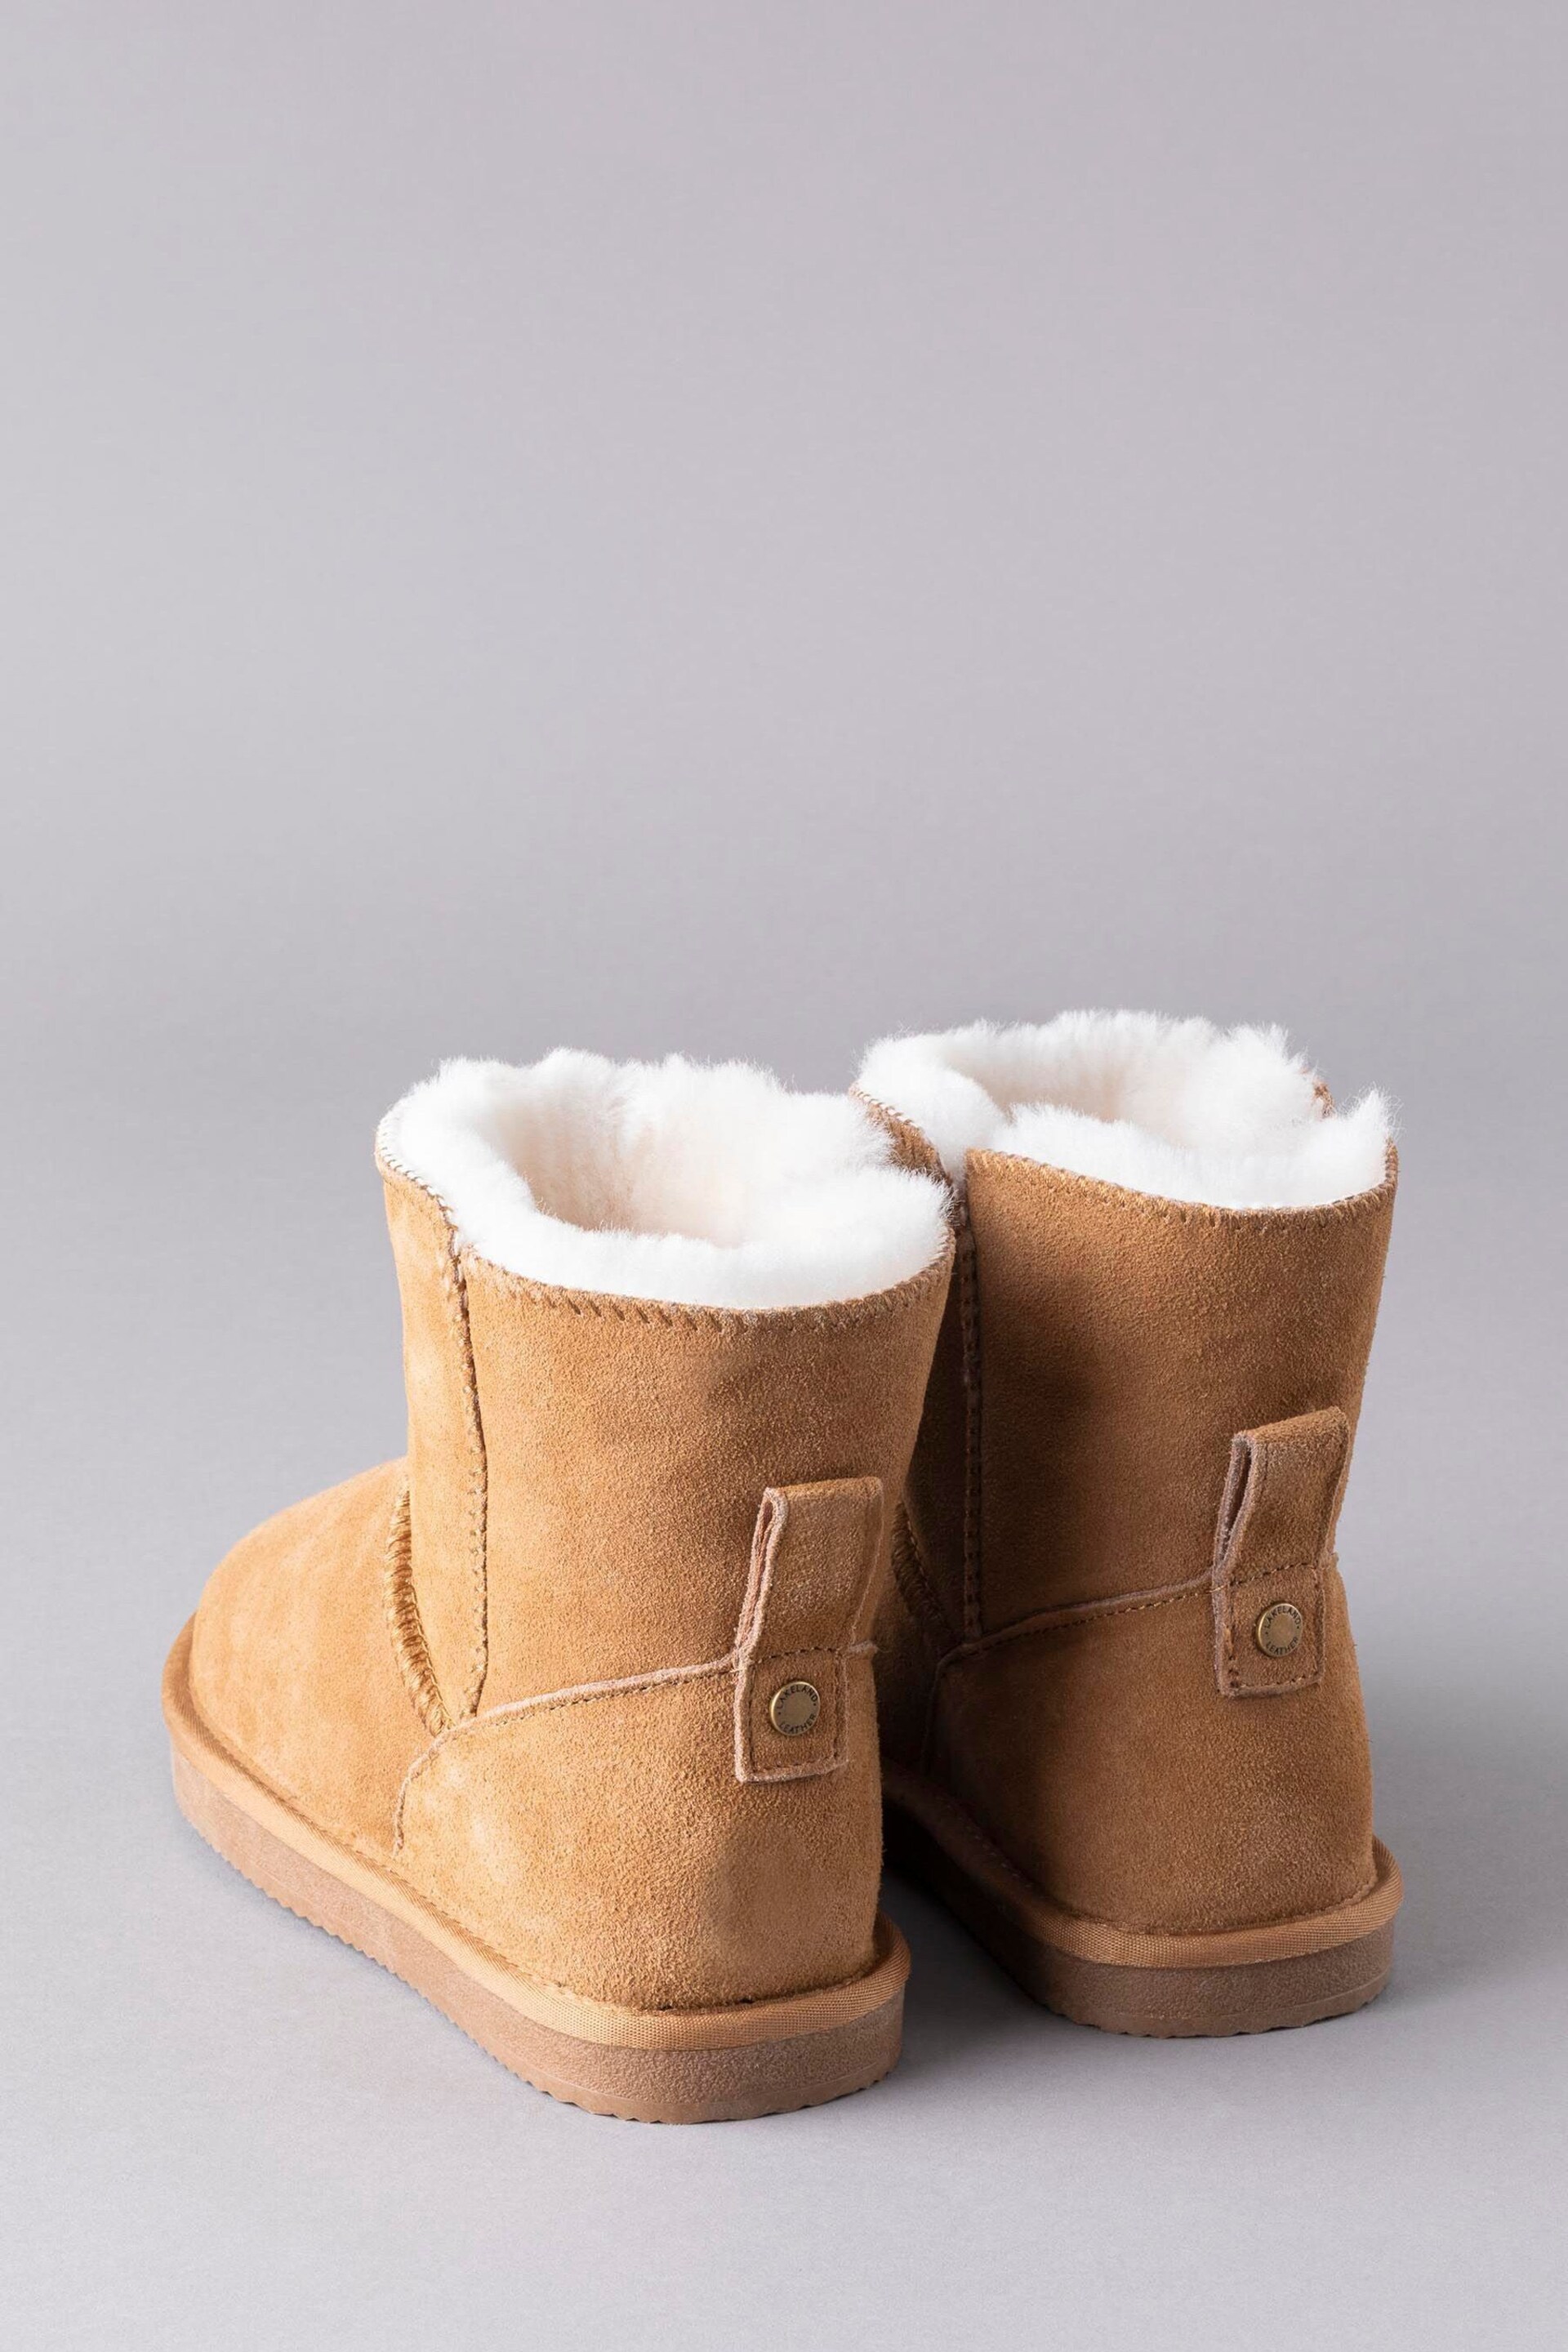 Lakeland Leather Ladies Sheepskin Boot Slippers - Image 3 of 5